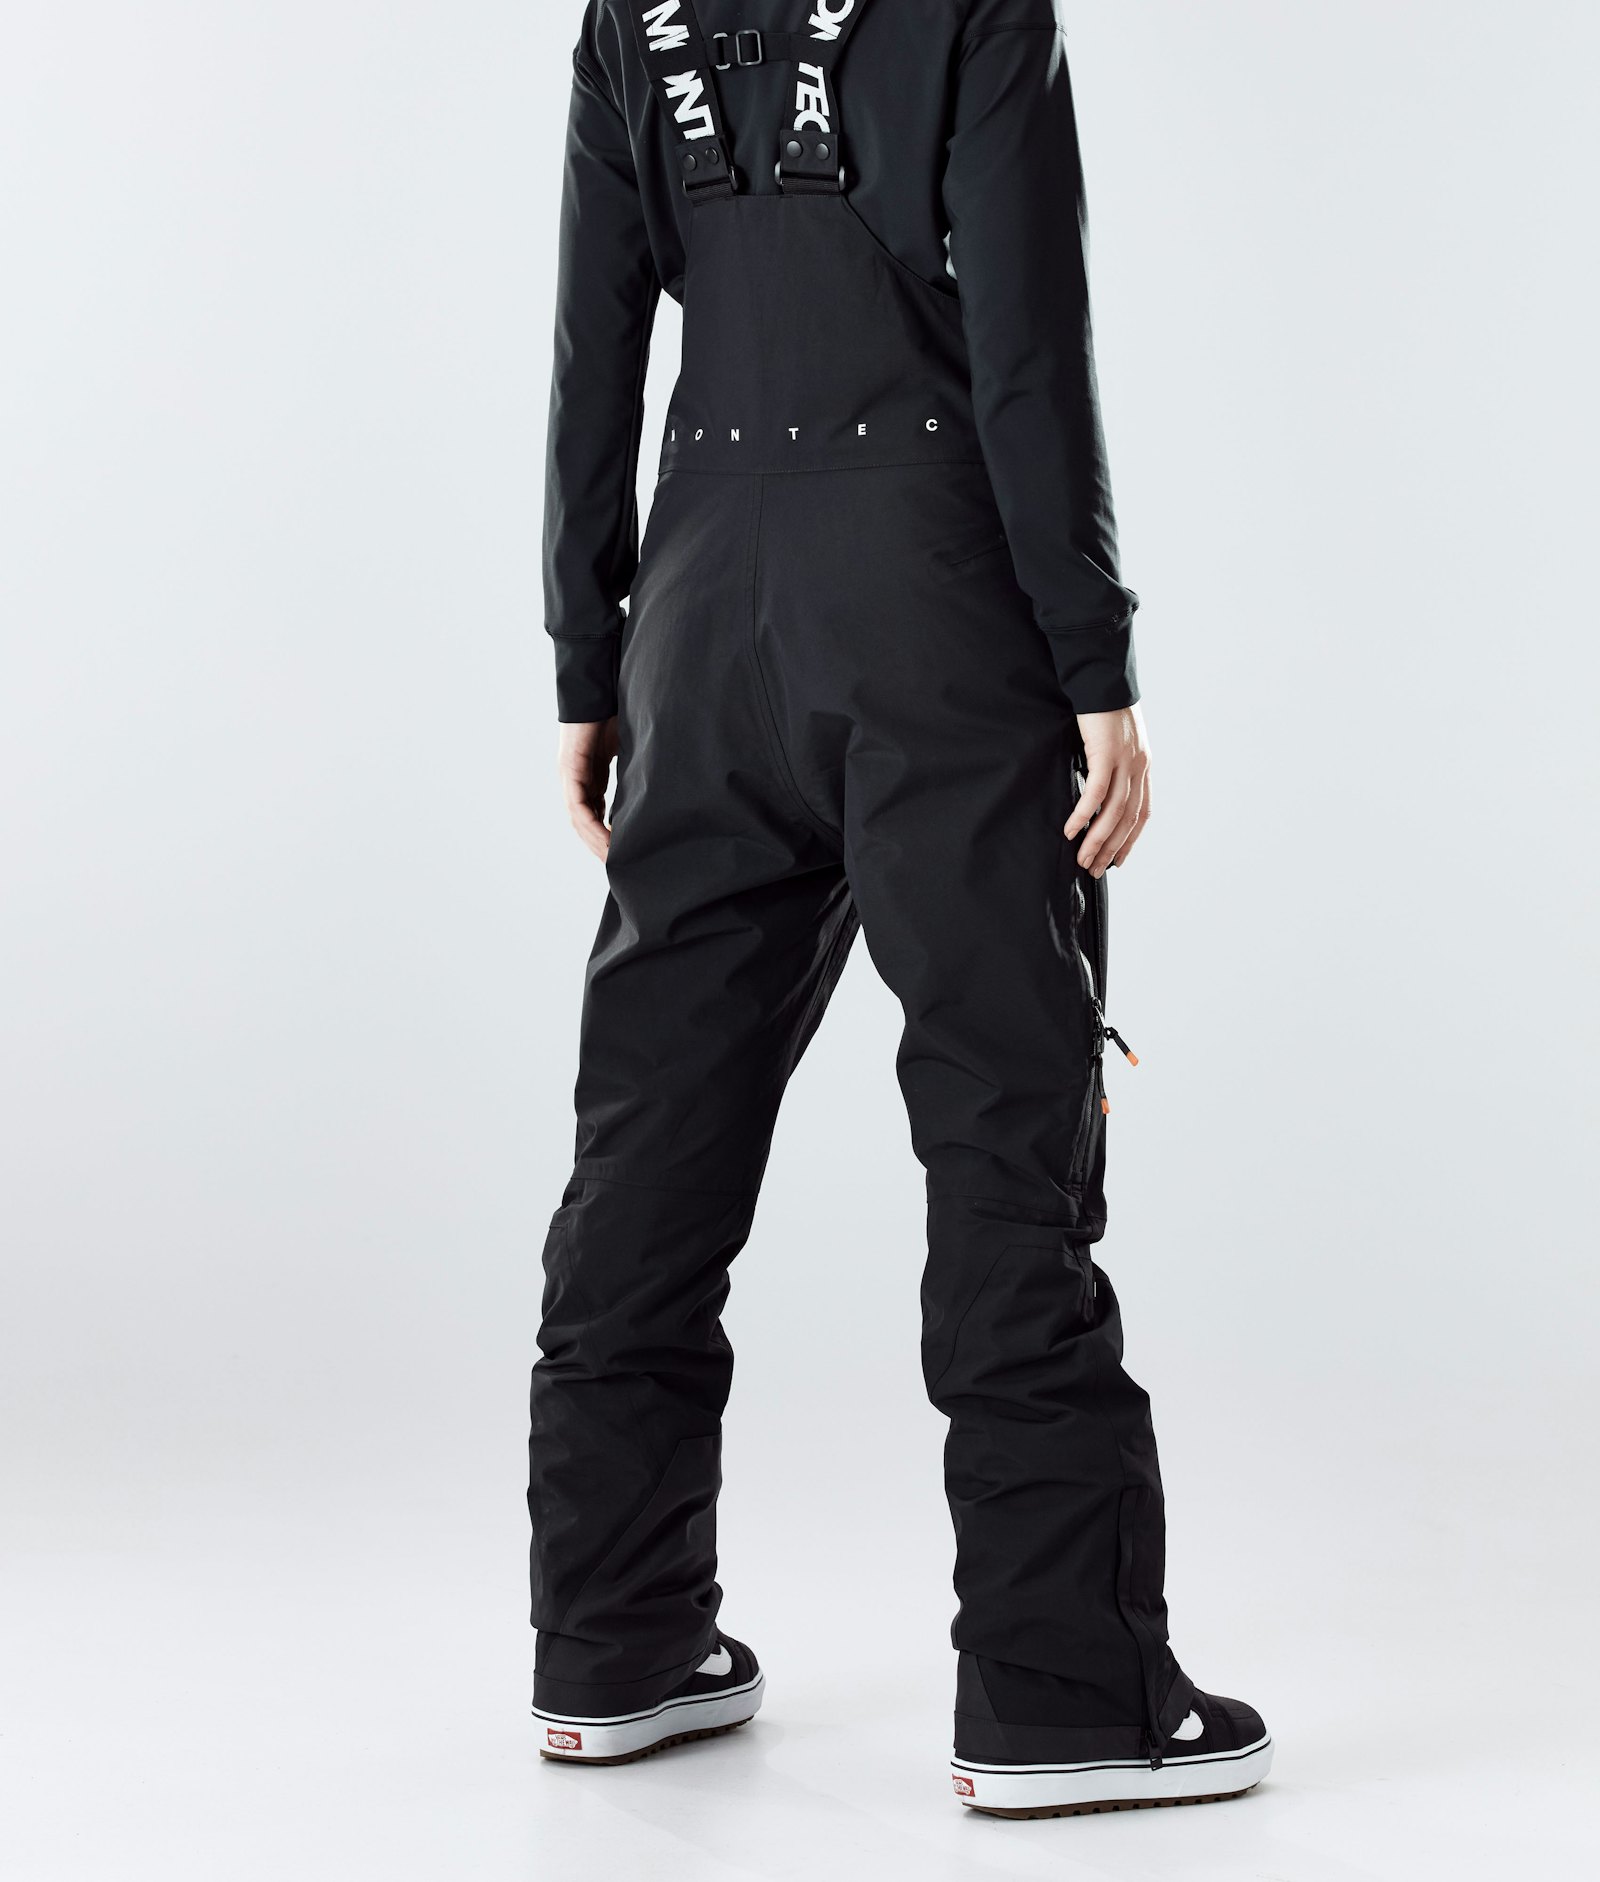 Fawk W 2020 Pantalon de Snowboard Femme Black